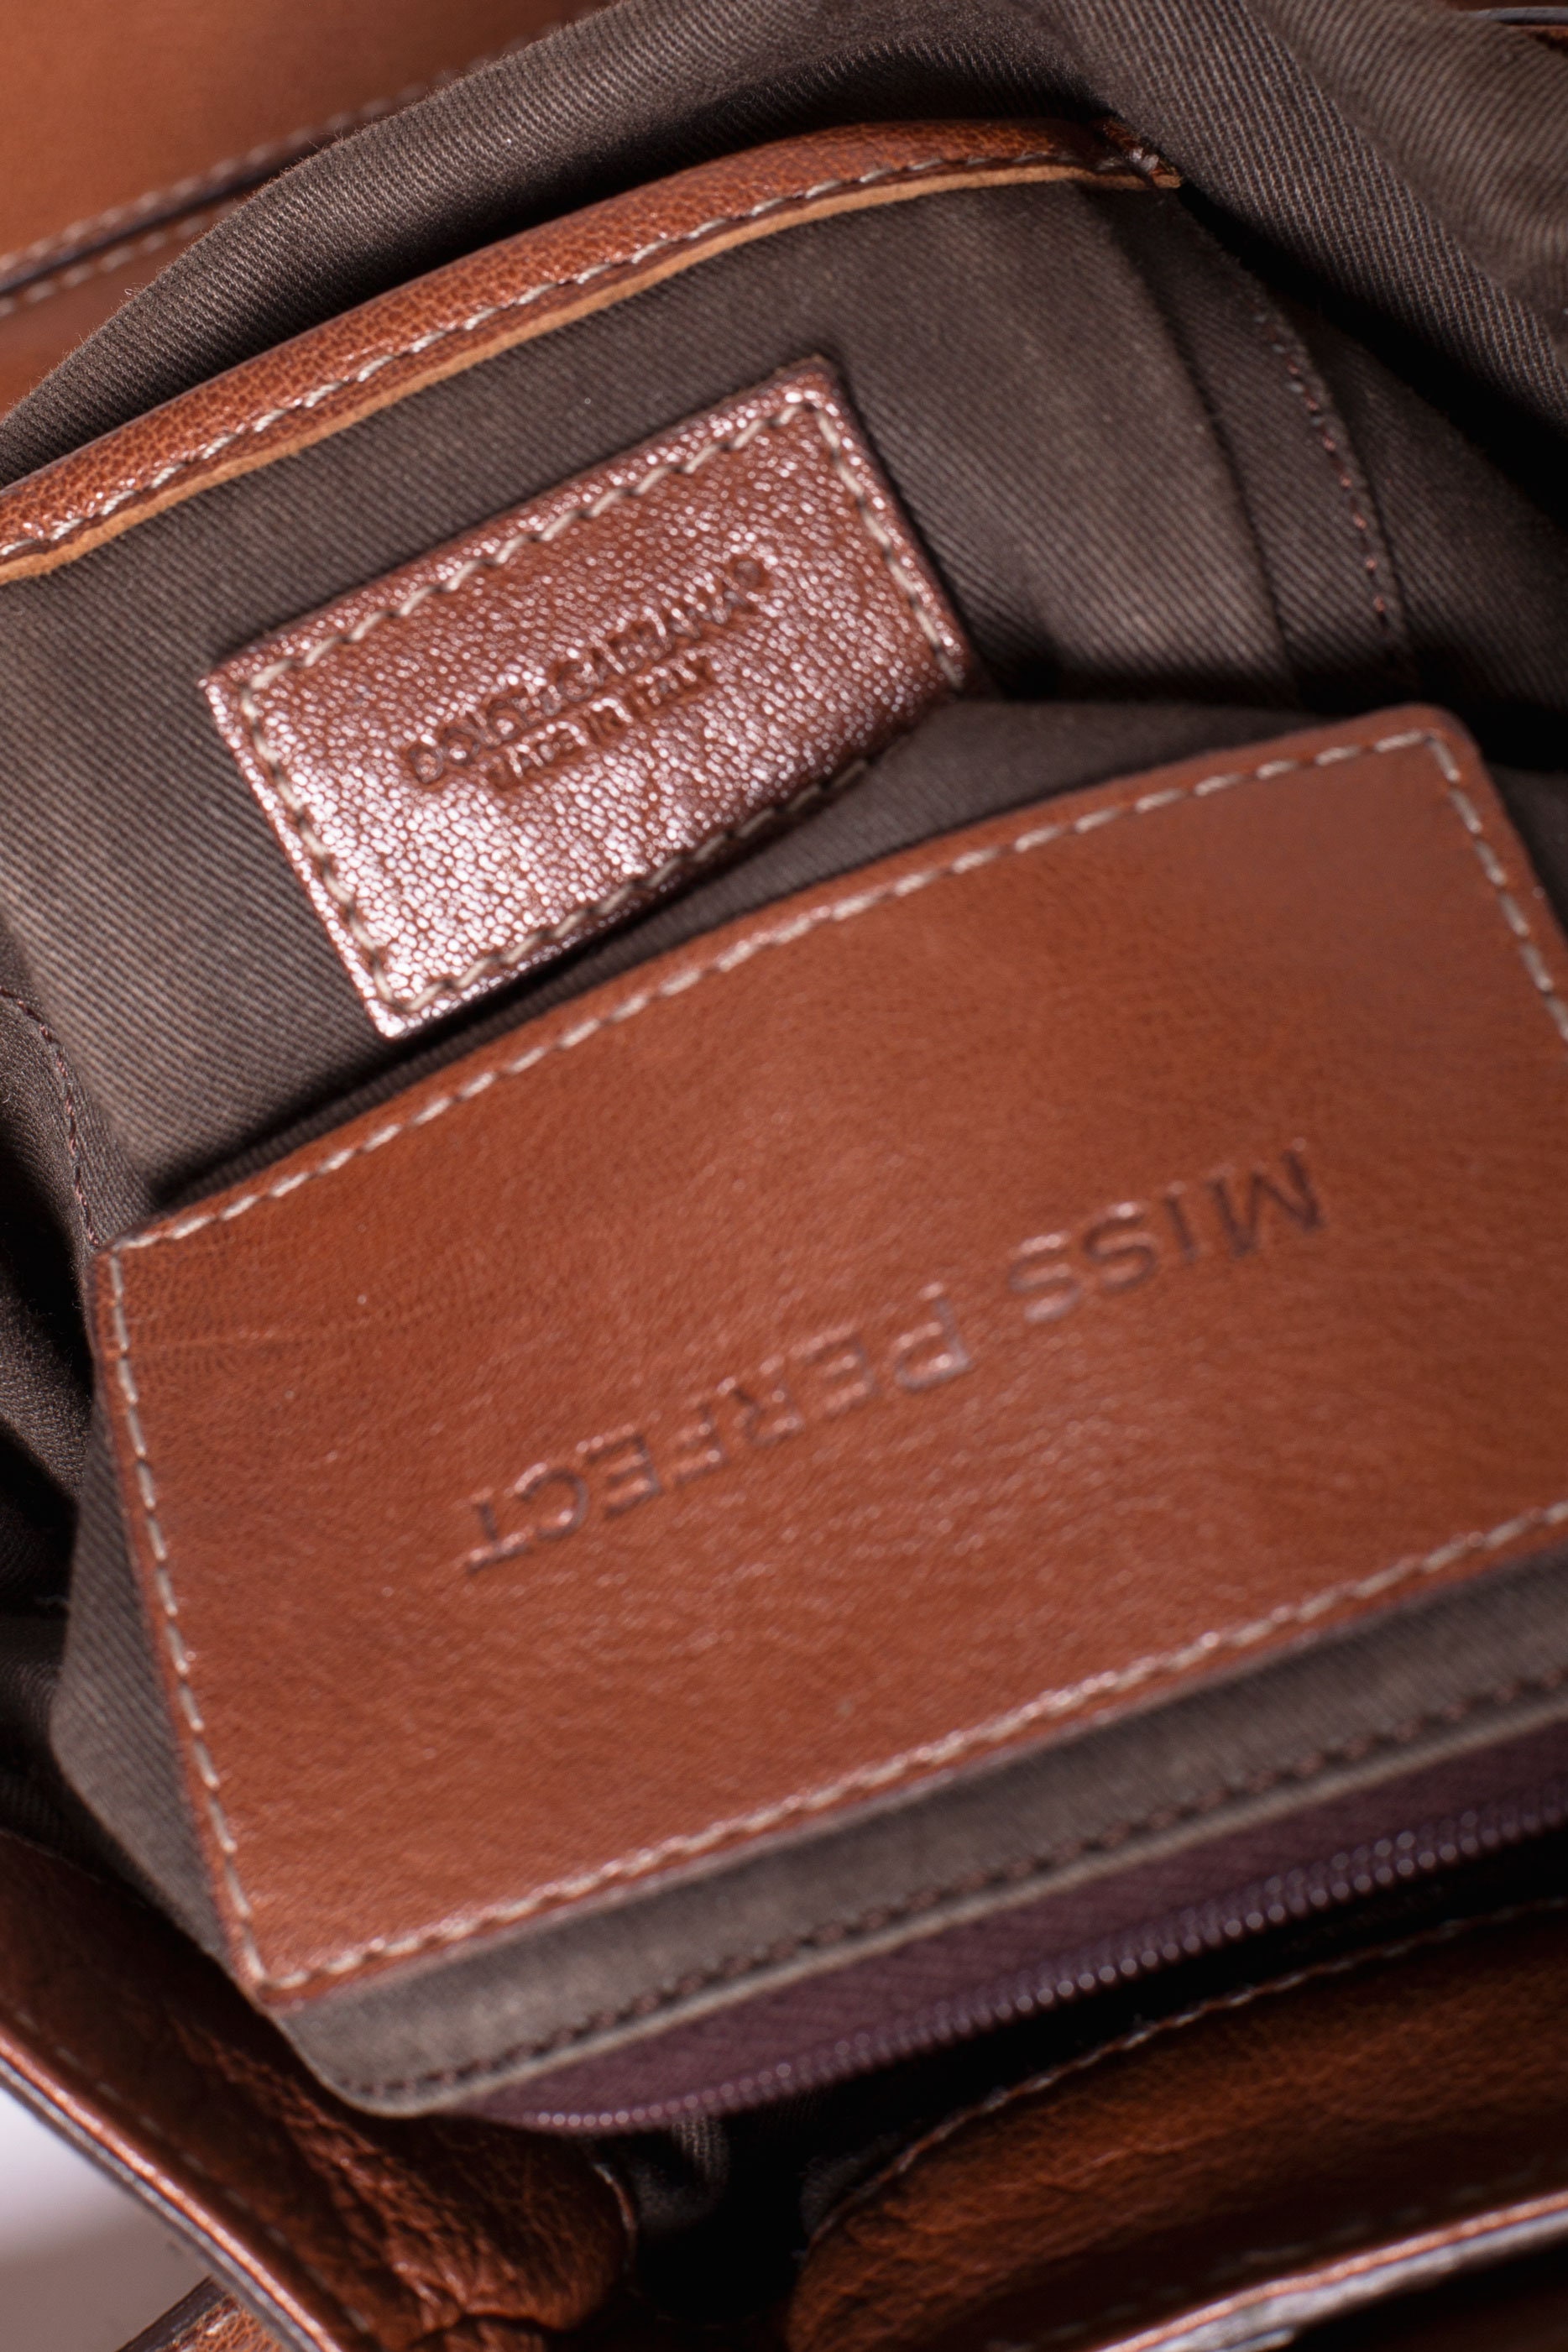 D&G Authenticated Leather Handbag